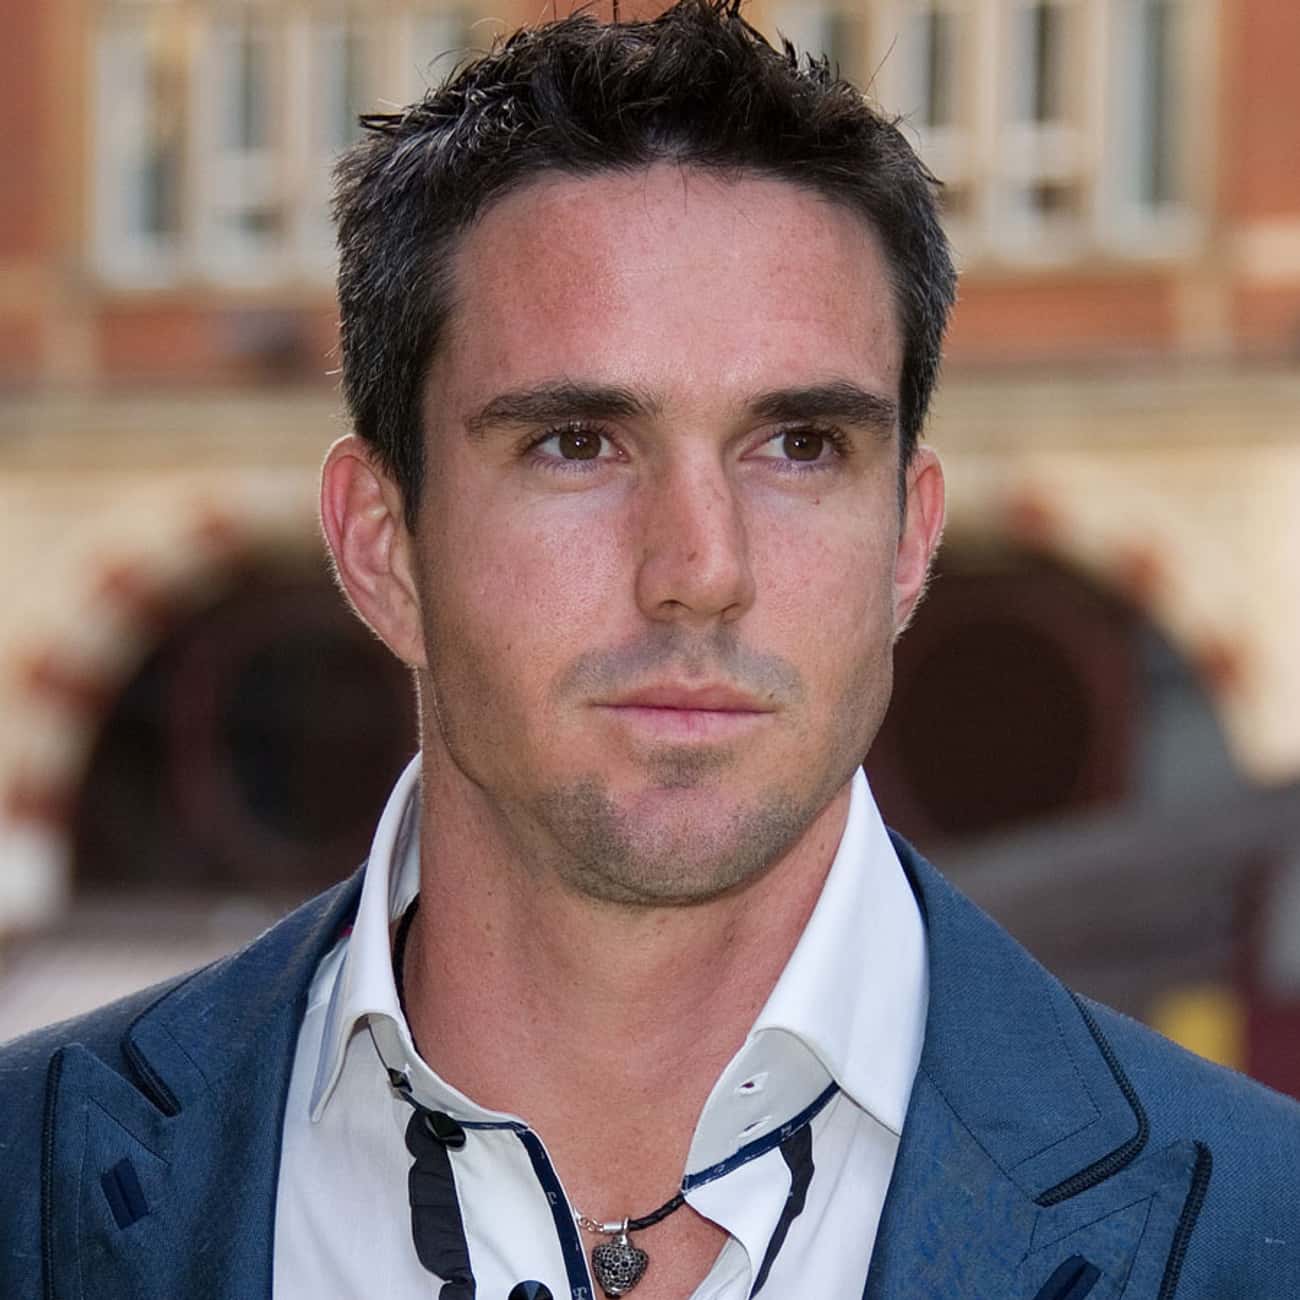 Kevin Pietersen